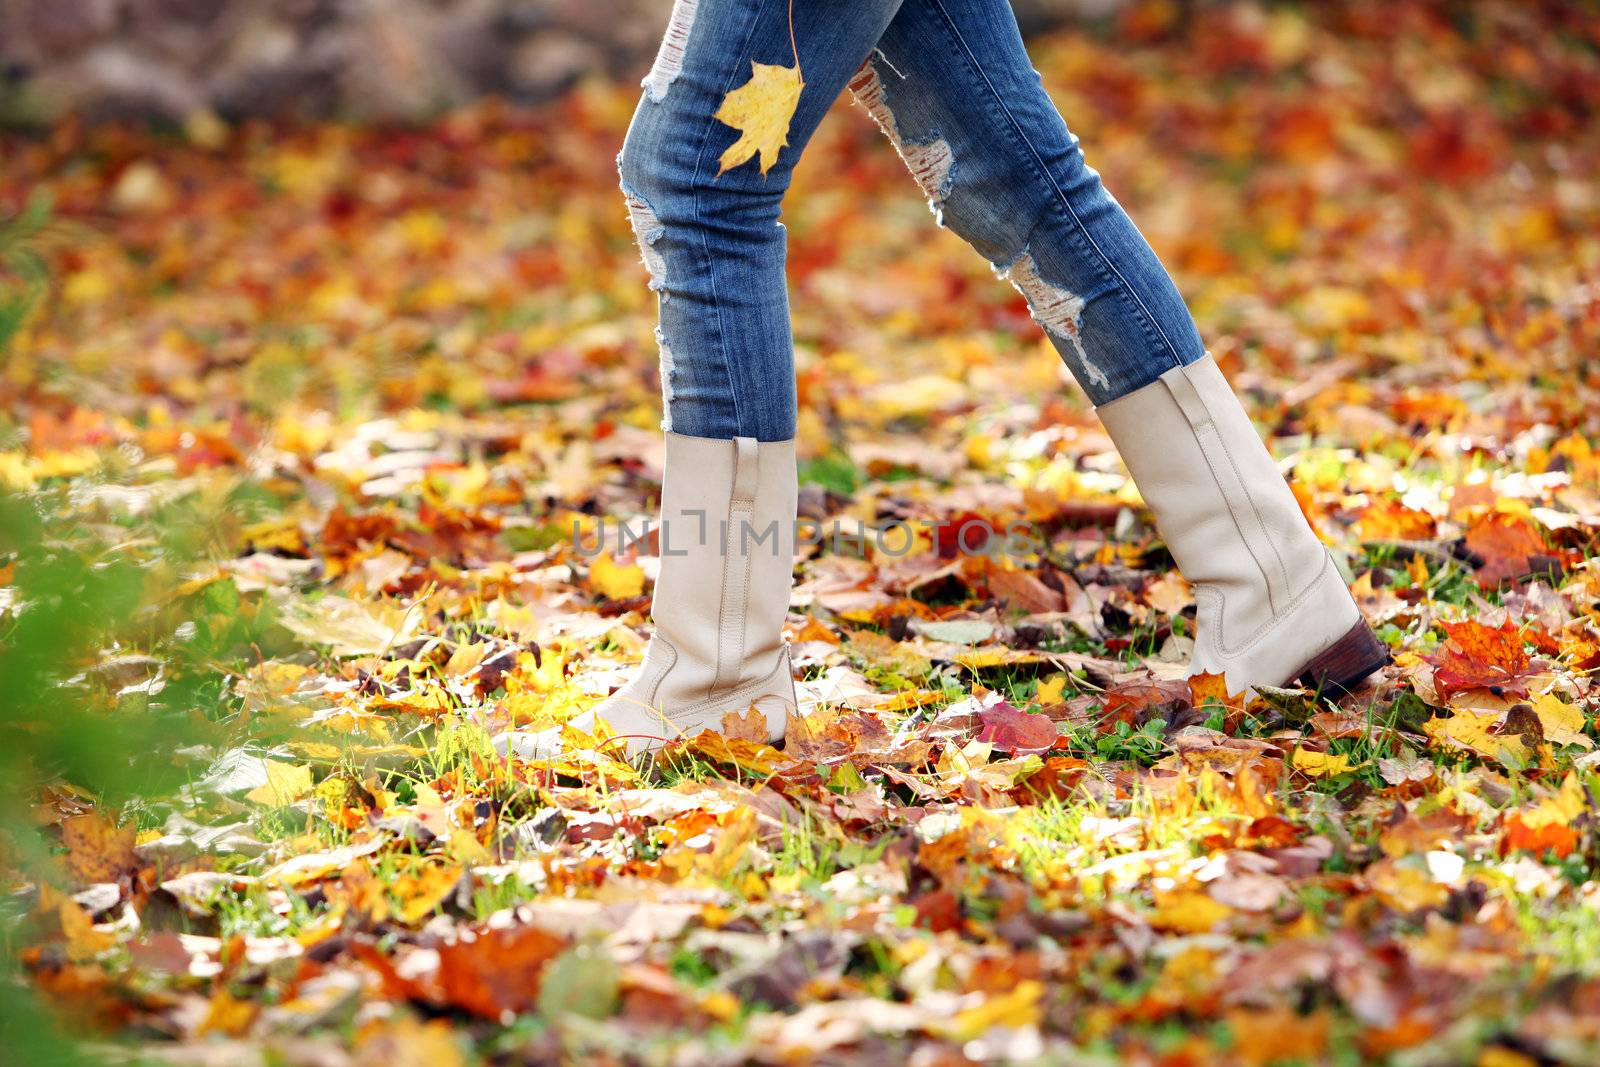 Walking through the autumn leaves by rufatjumali